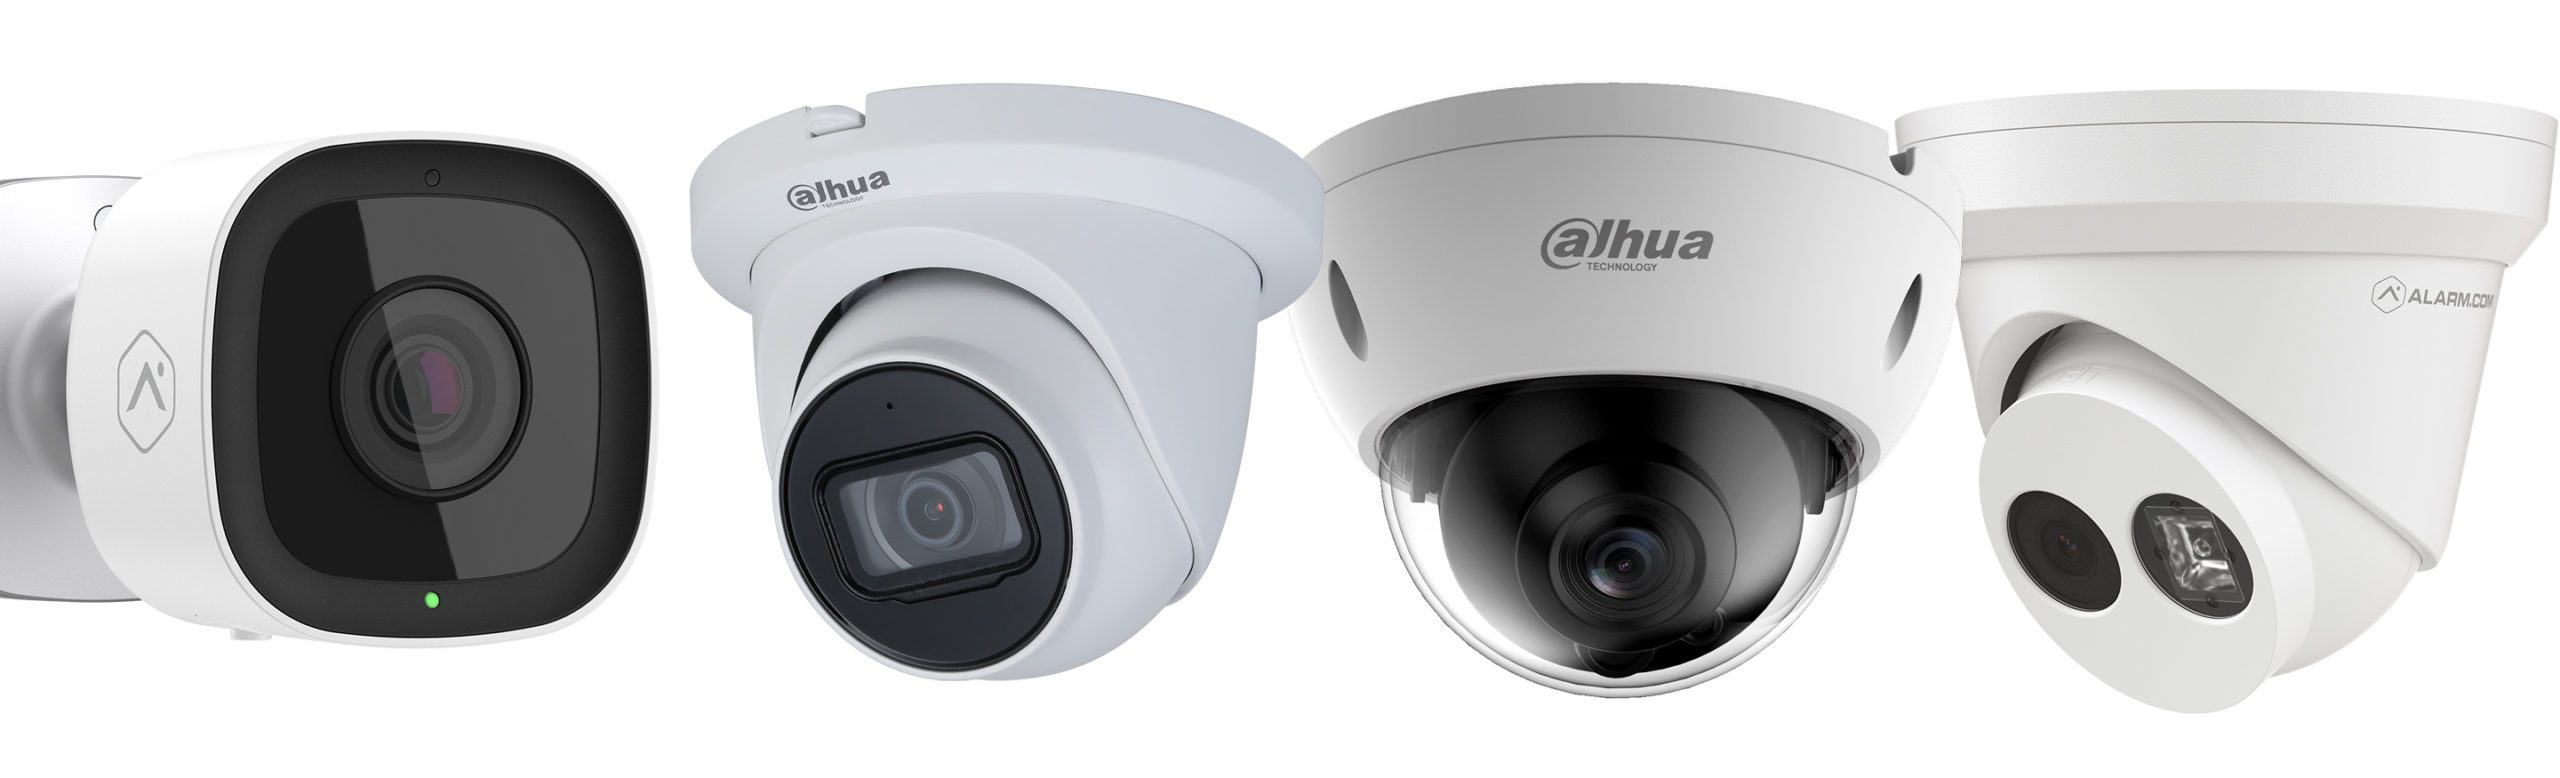 Home Security Cameras, Video Surveillance & CCTV Systems